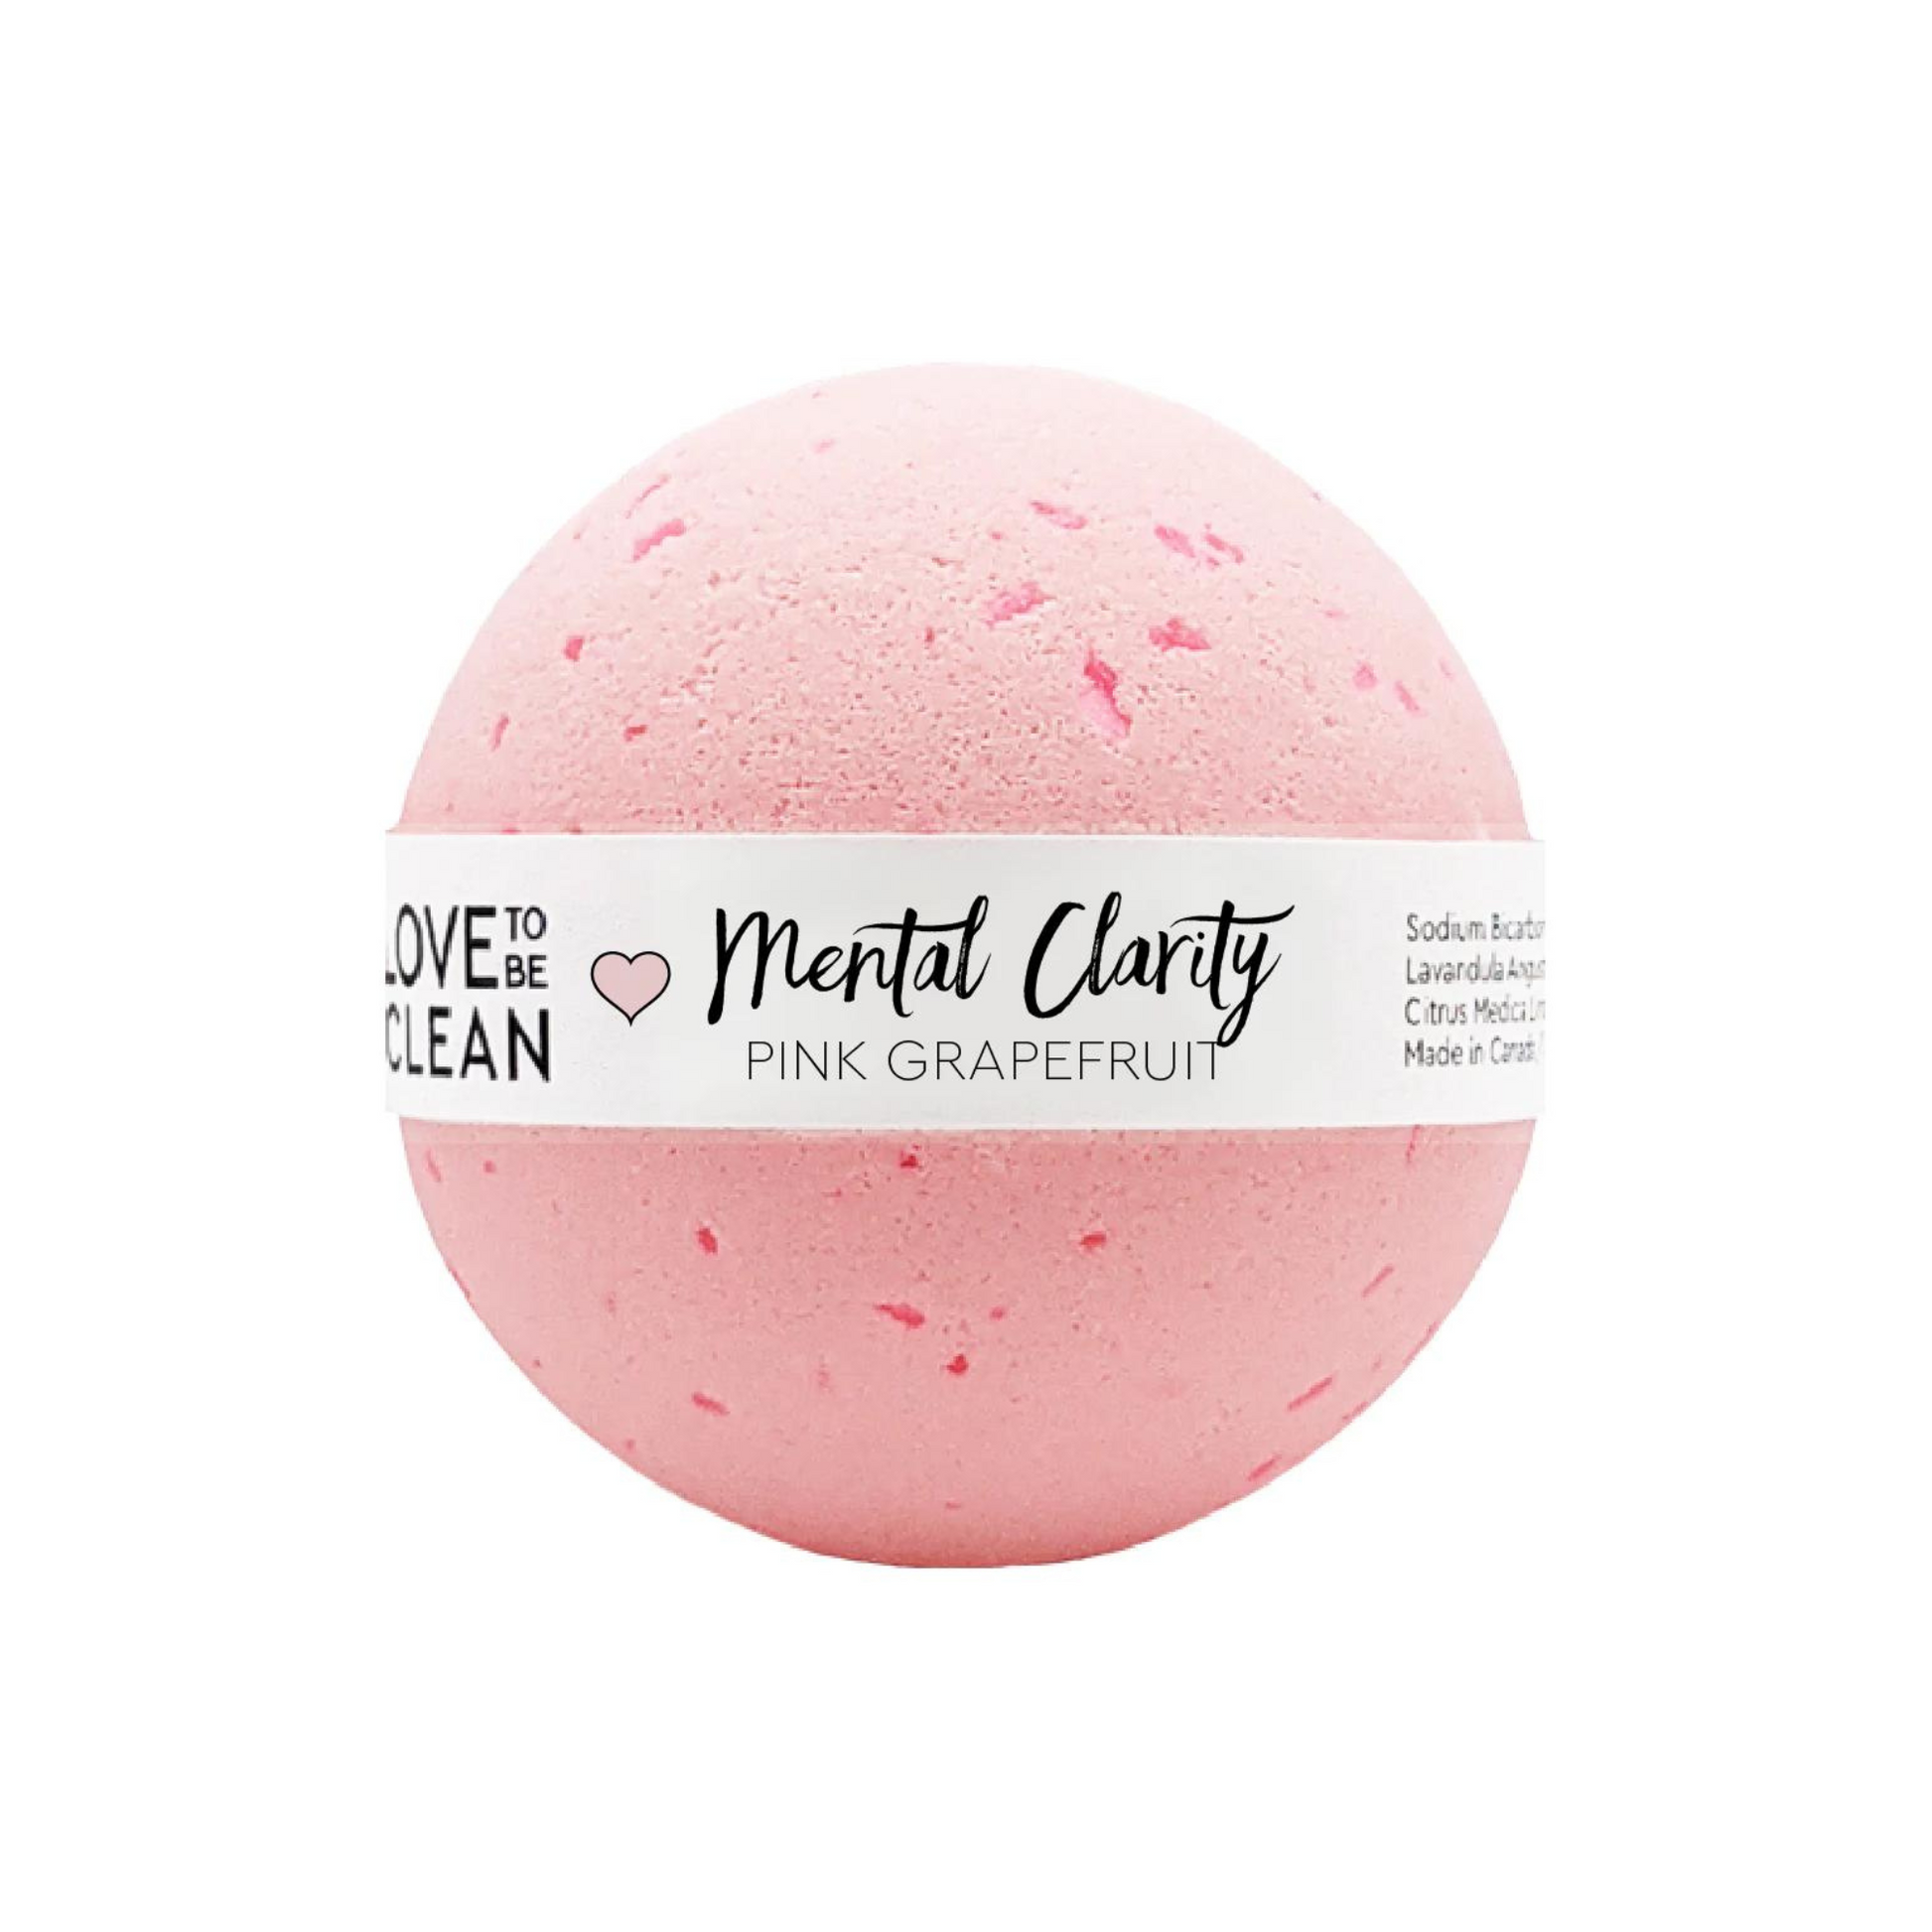 mental clarity pink grapefruit bath bomb